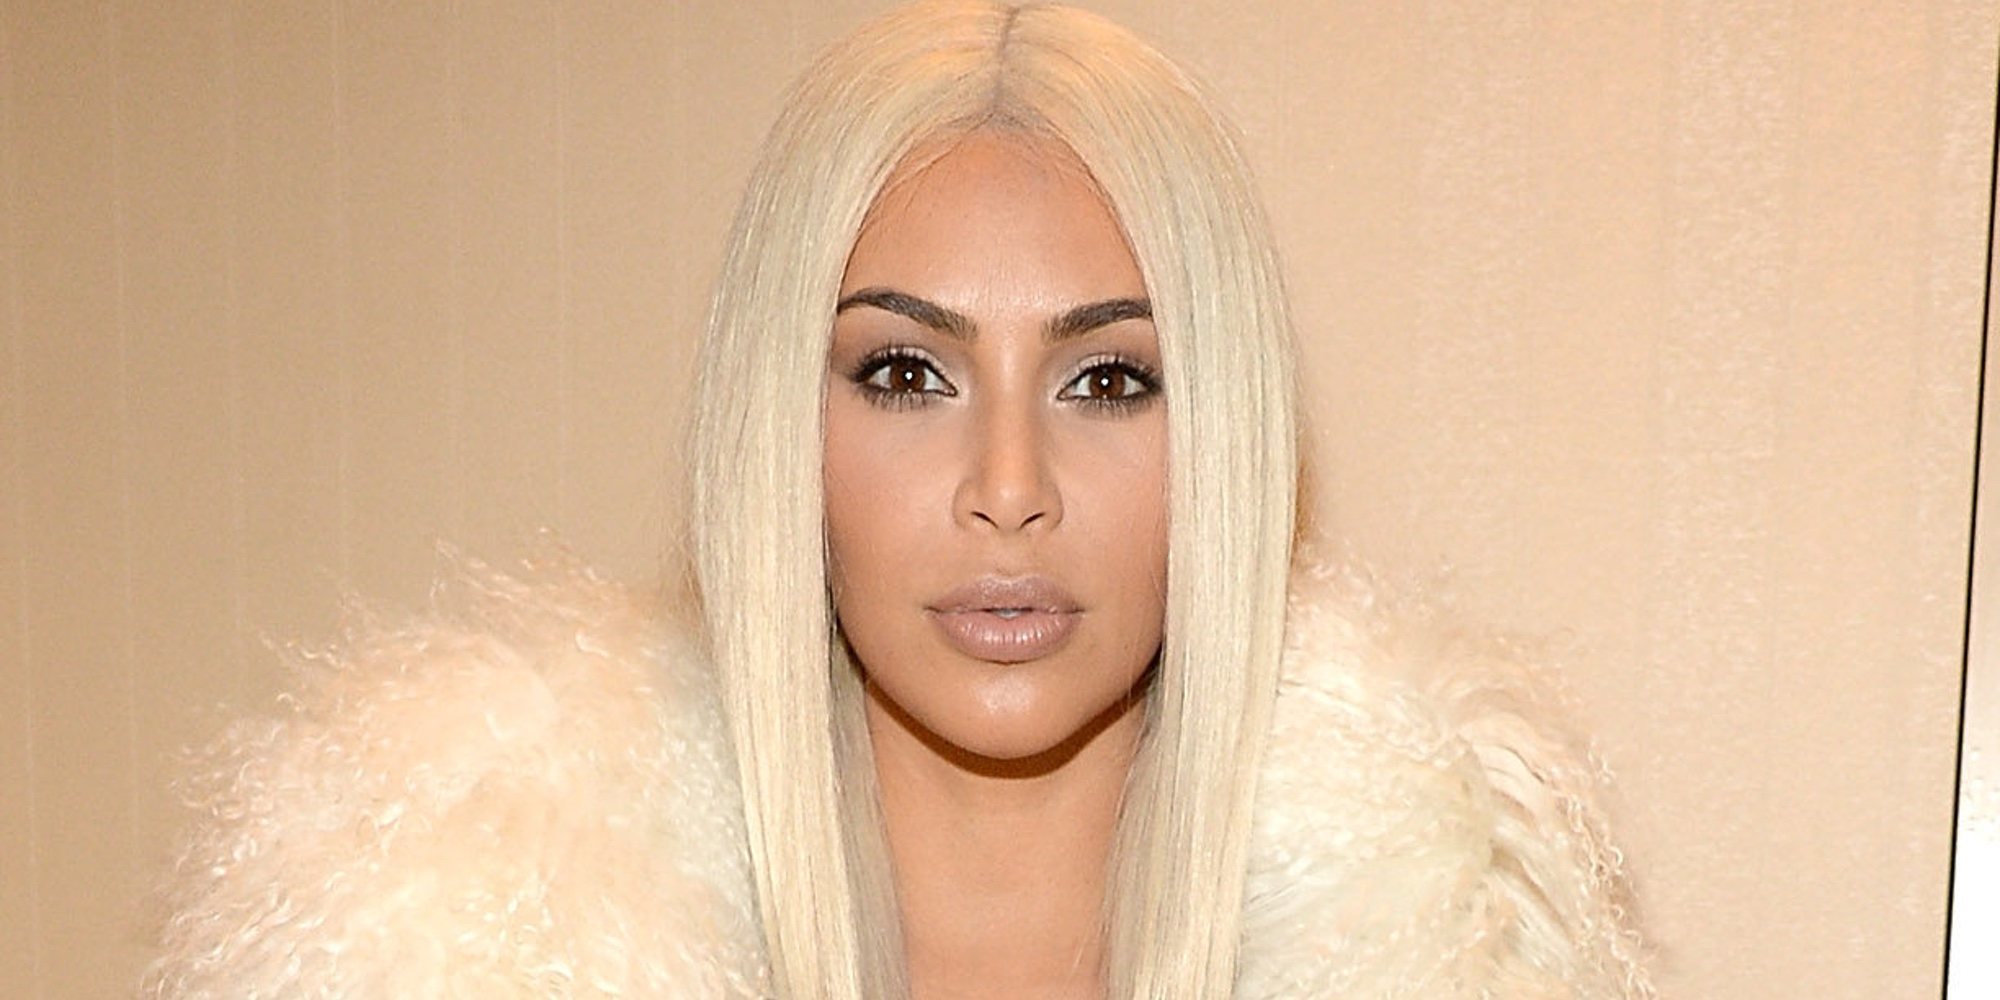 Kim Kardashian presenta a su hija Chicago con filtro incluido